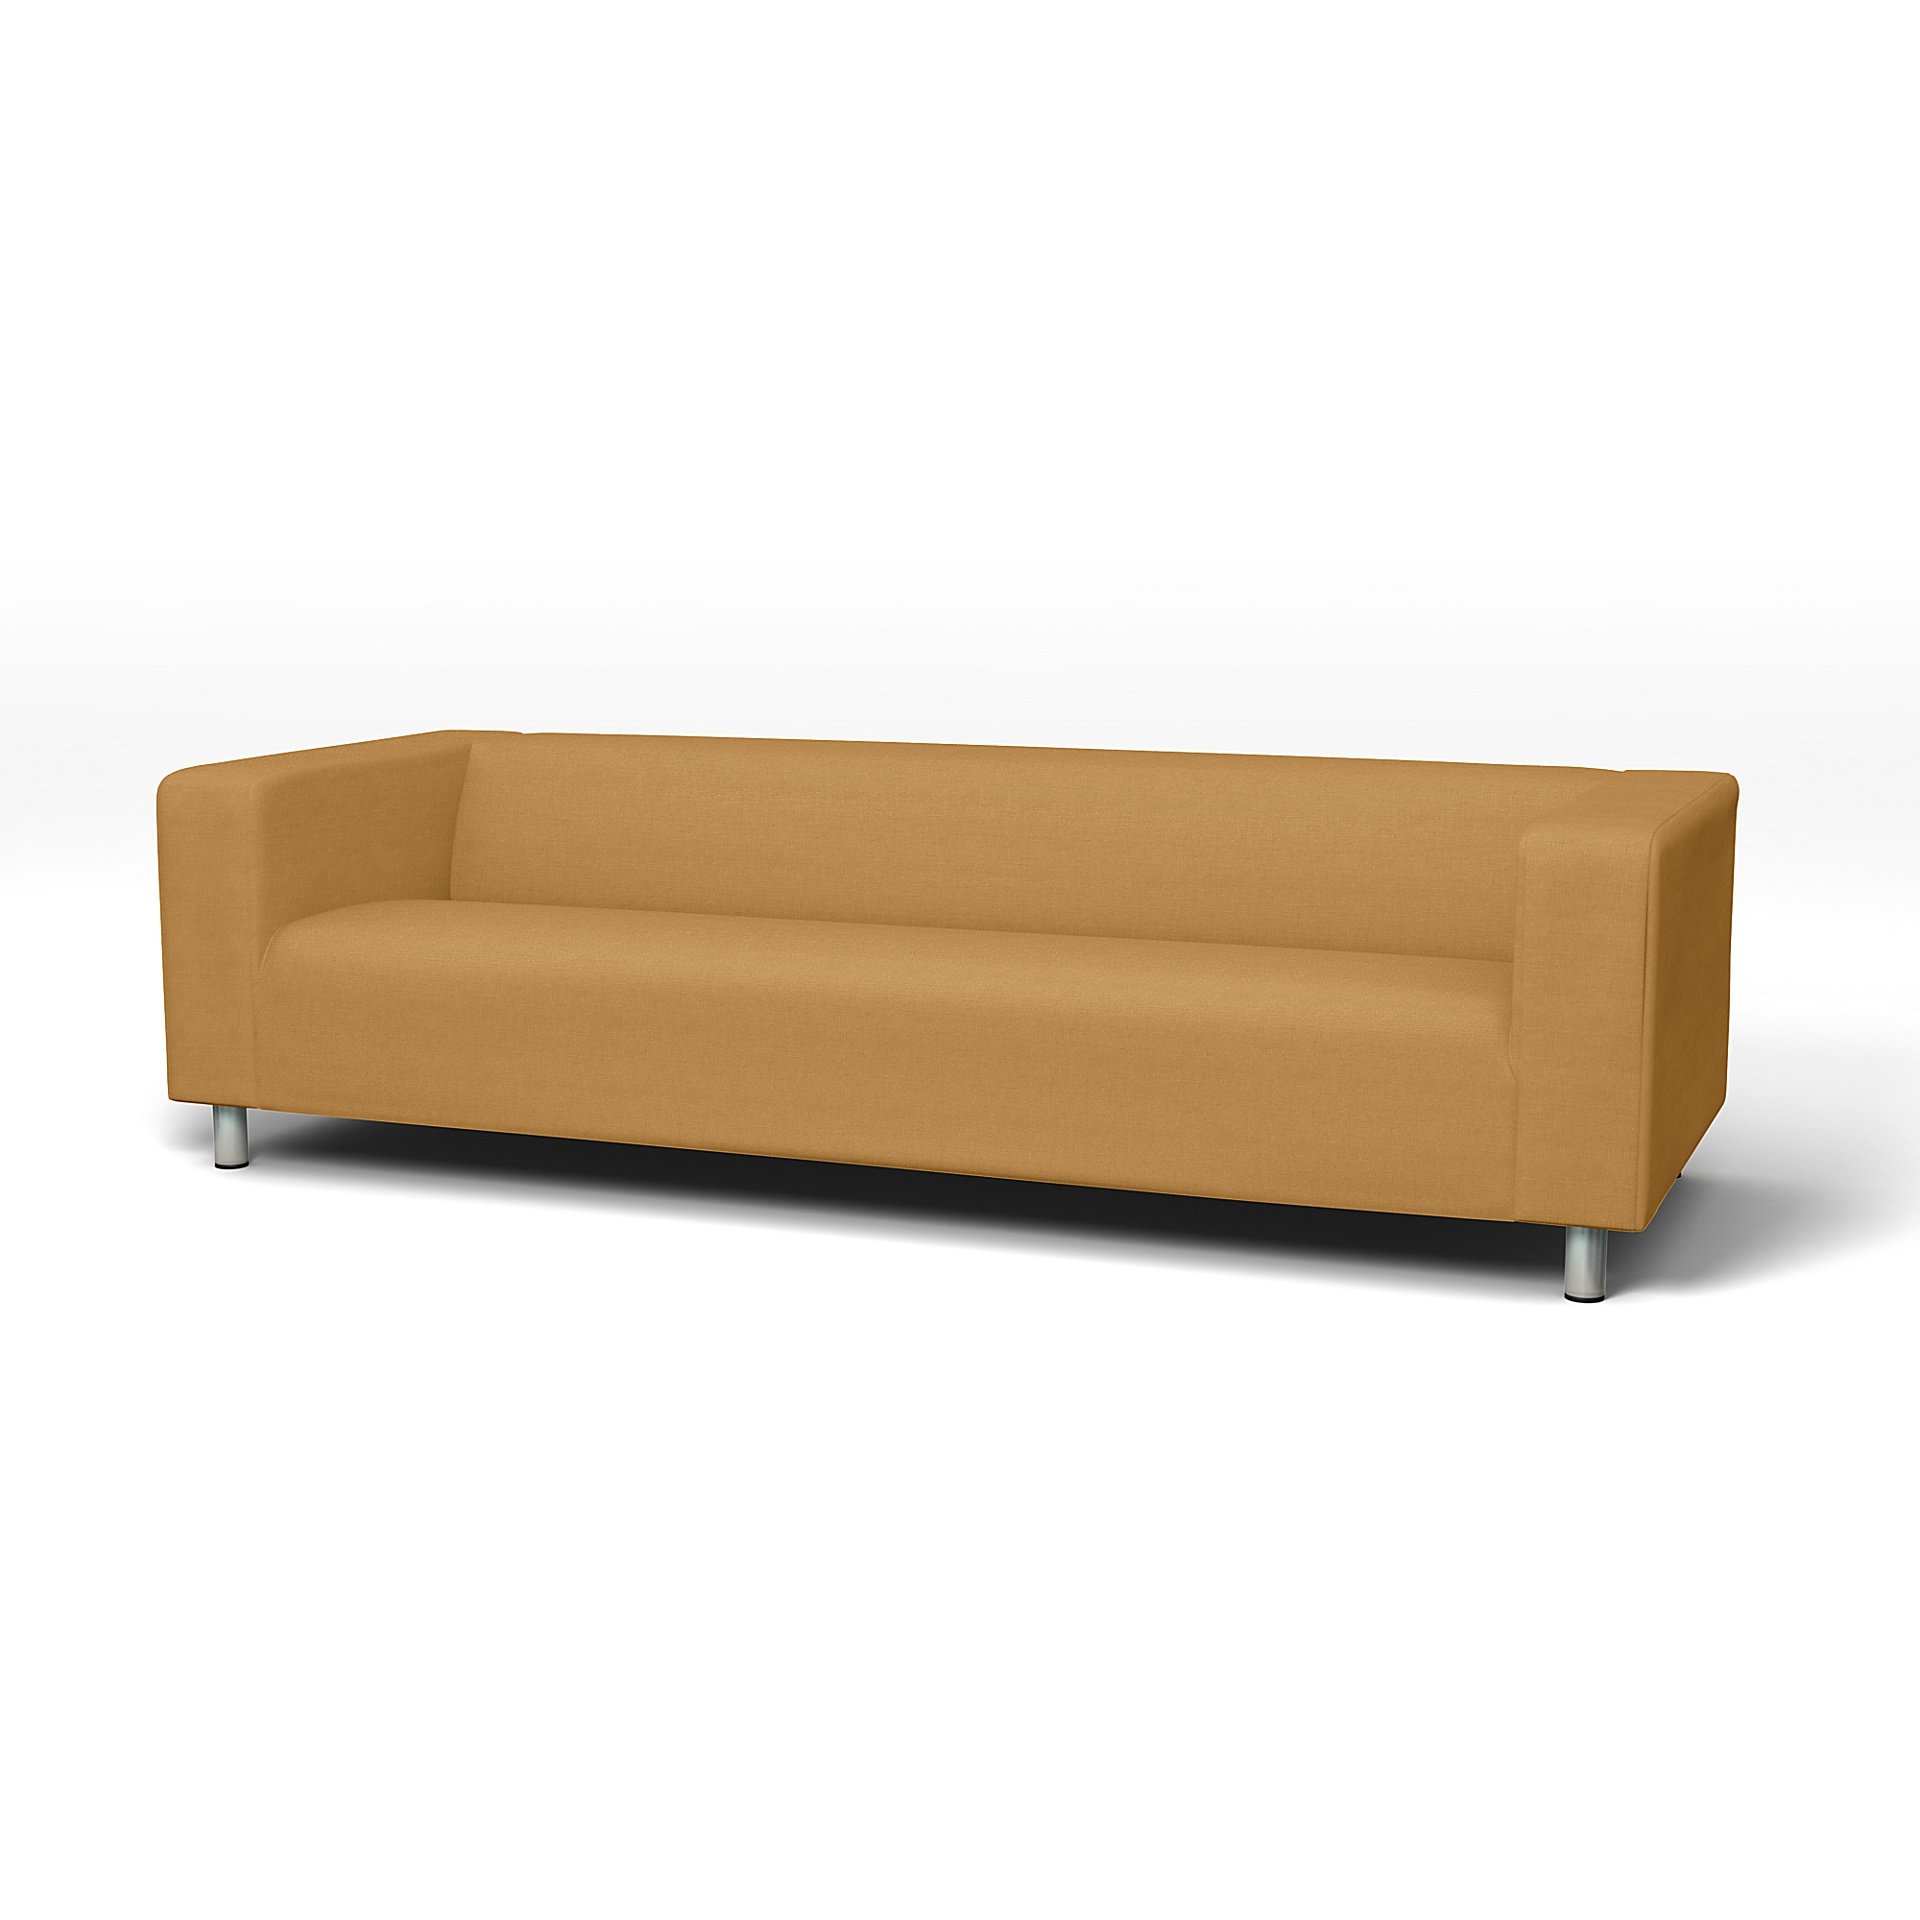 IKEA - Klippan 4 Seater Sofa Cover, Mustard, Linen - Bemz